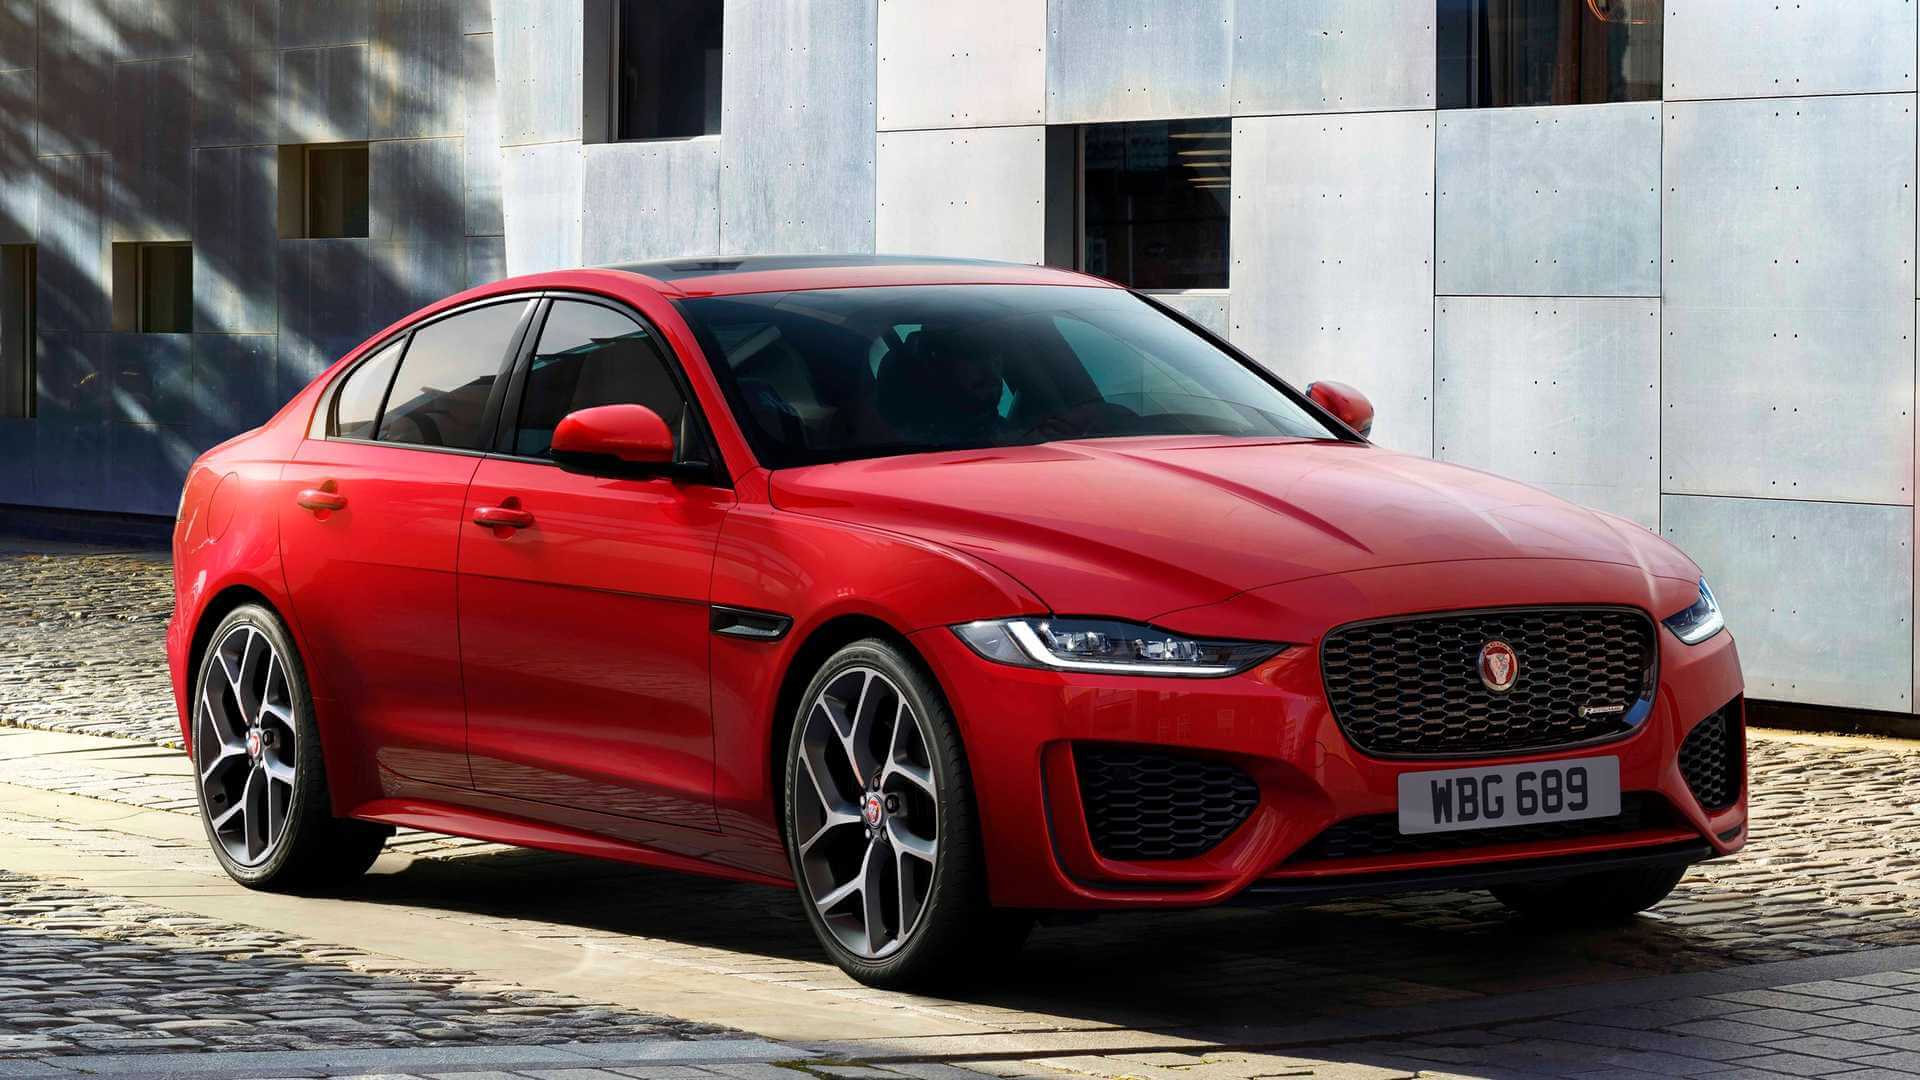 H Jaguar ανανεώνει και εμπλουτίζει την XE με νέες τεχνολογίες